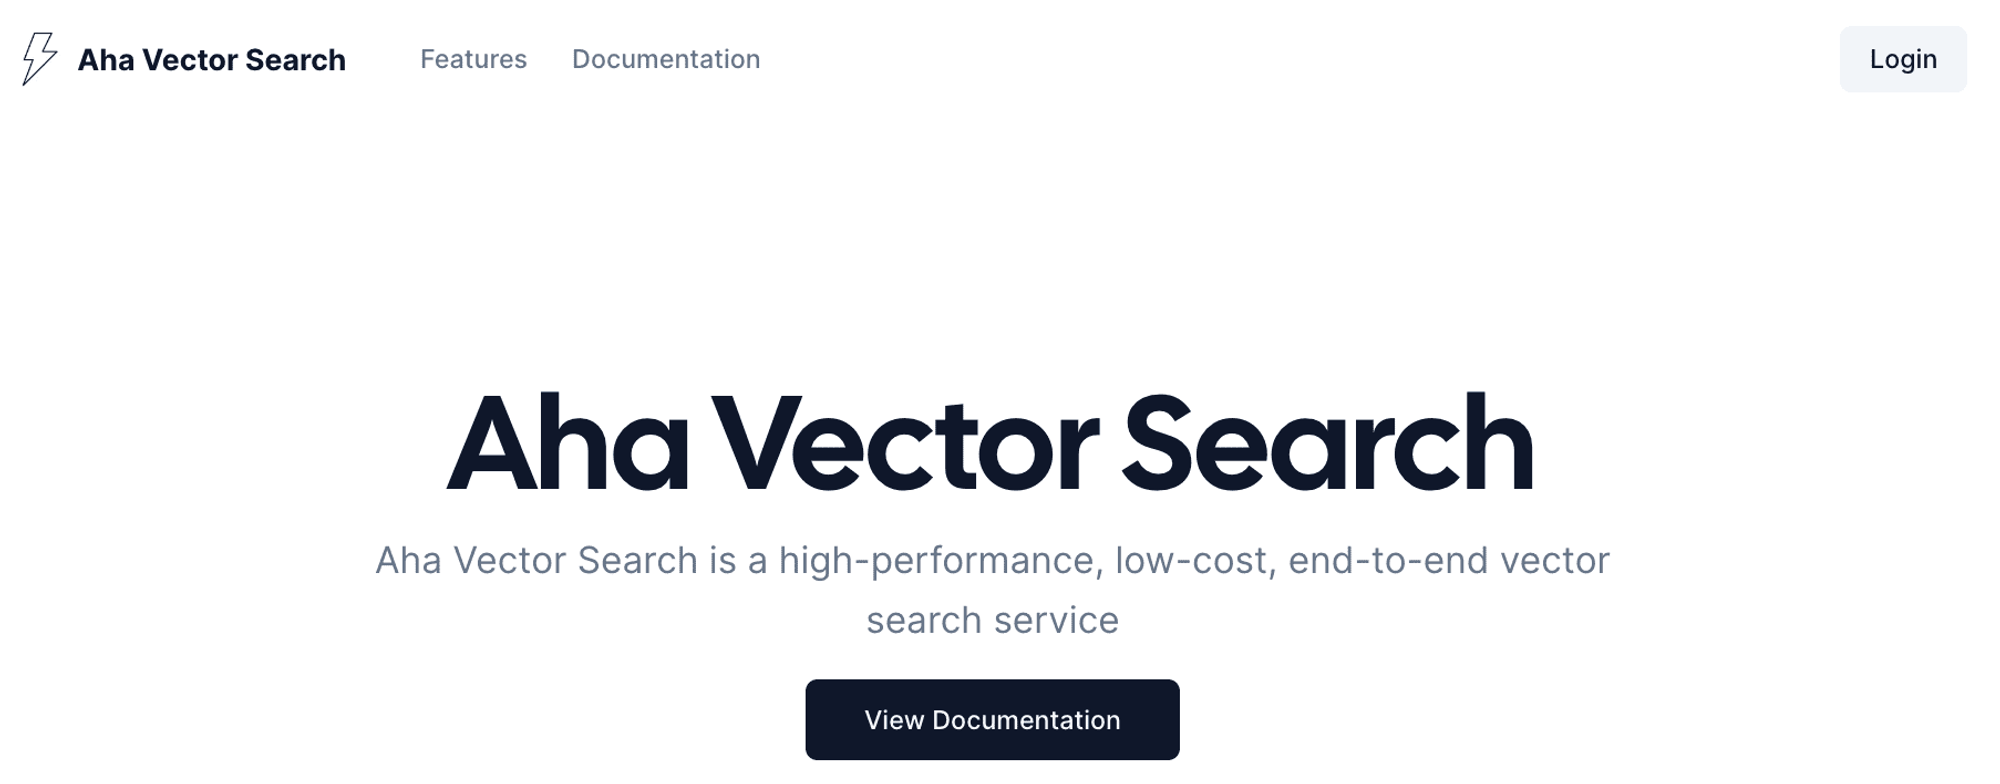 Aha Vector Search